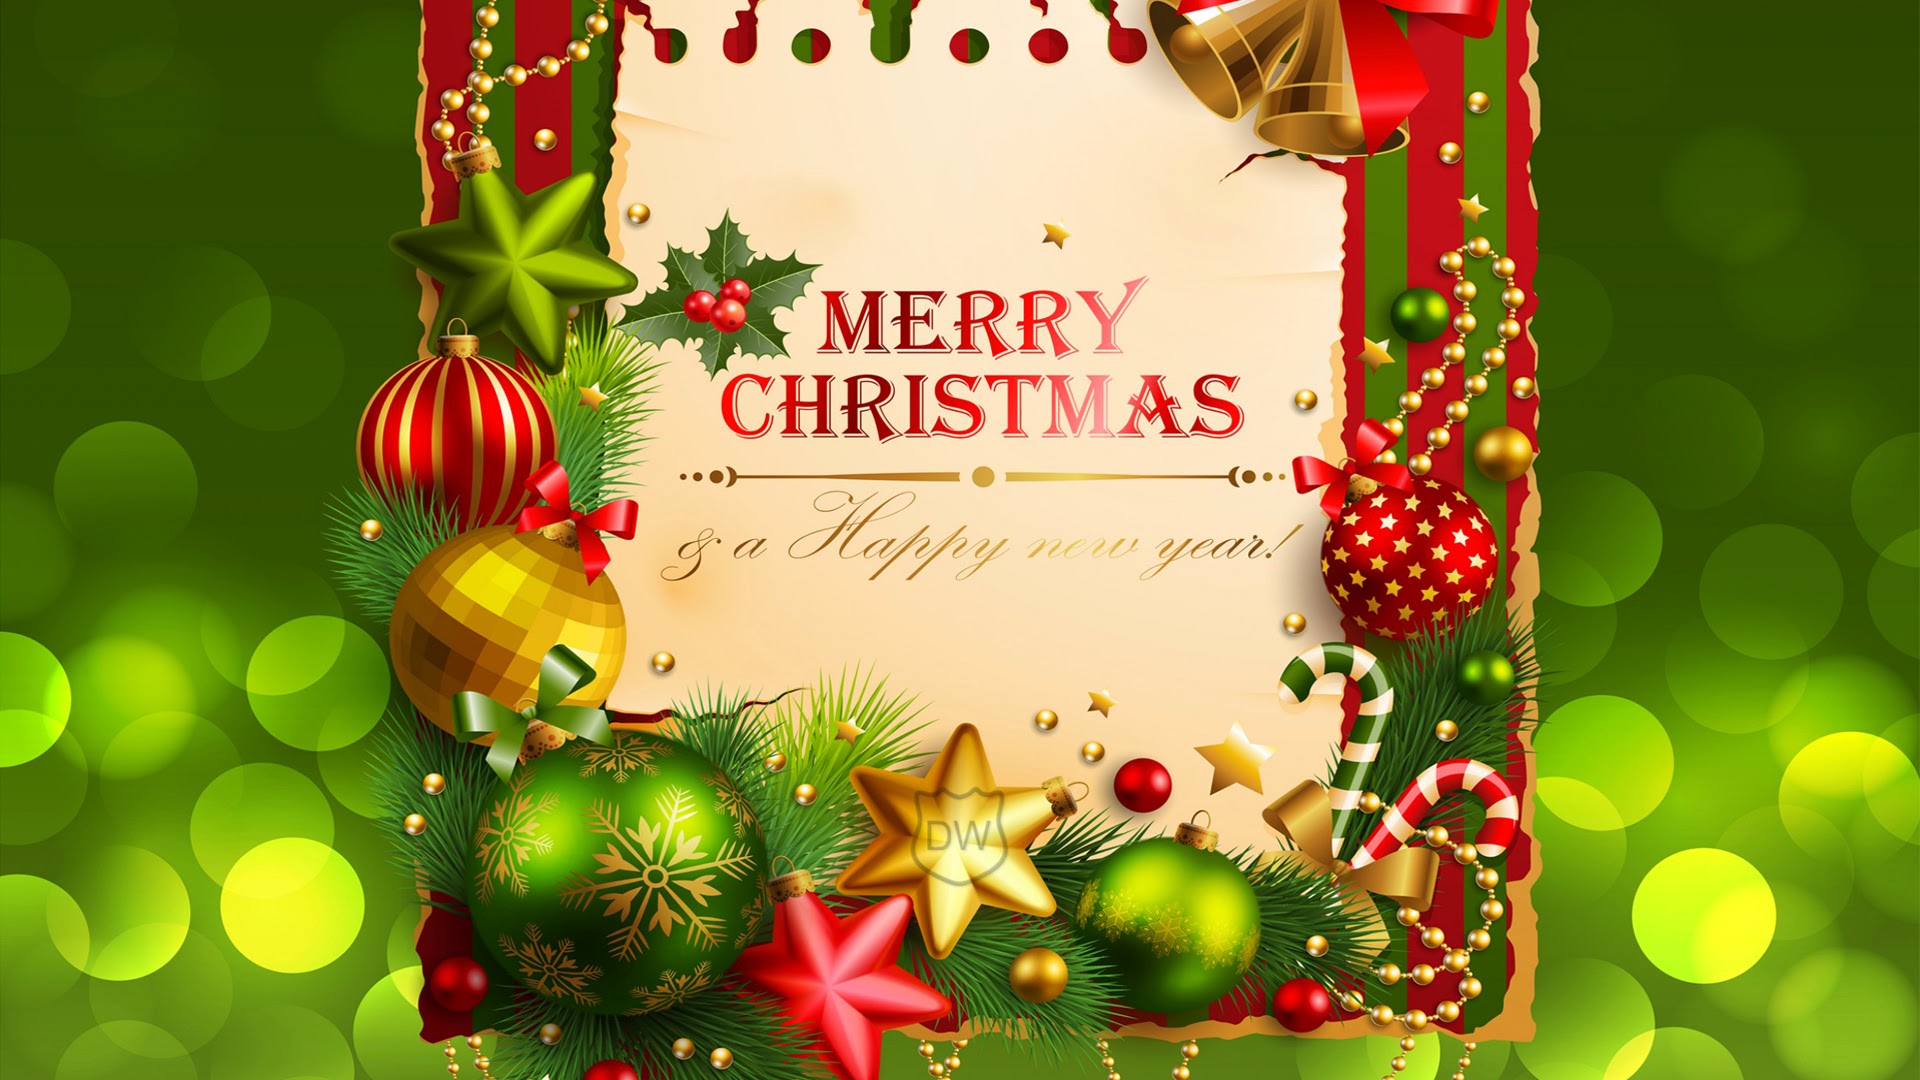 Merry Christmas Image Photos Wallpaper Pics For Fb Whatsapp